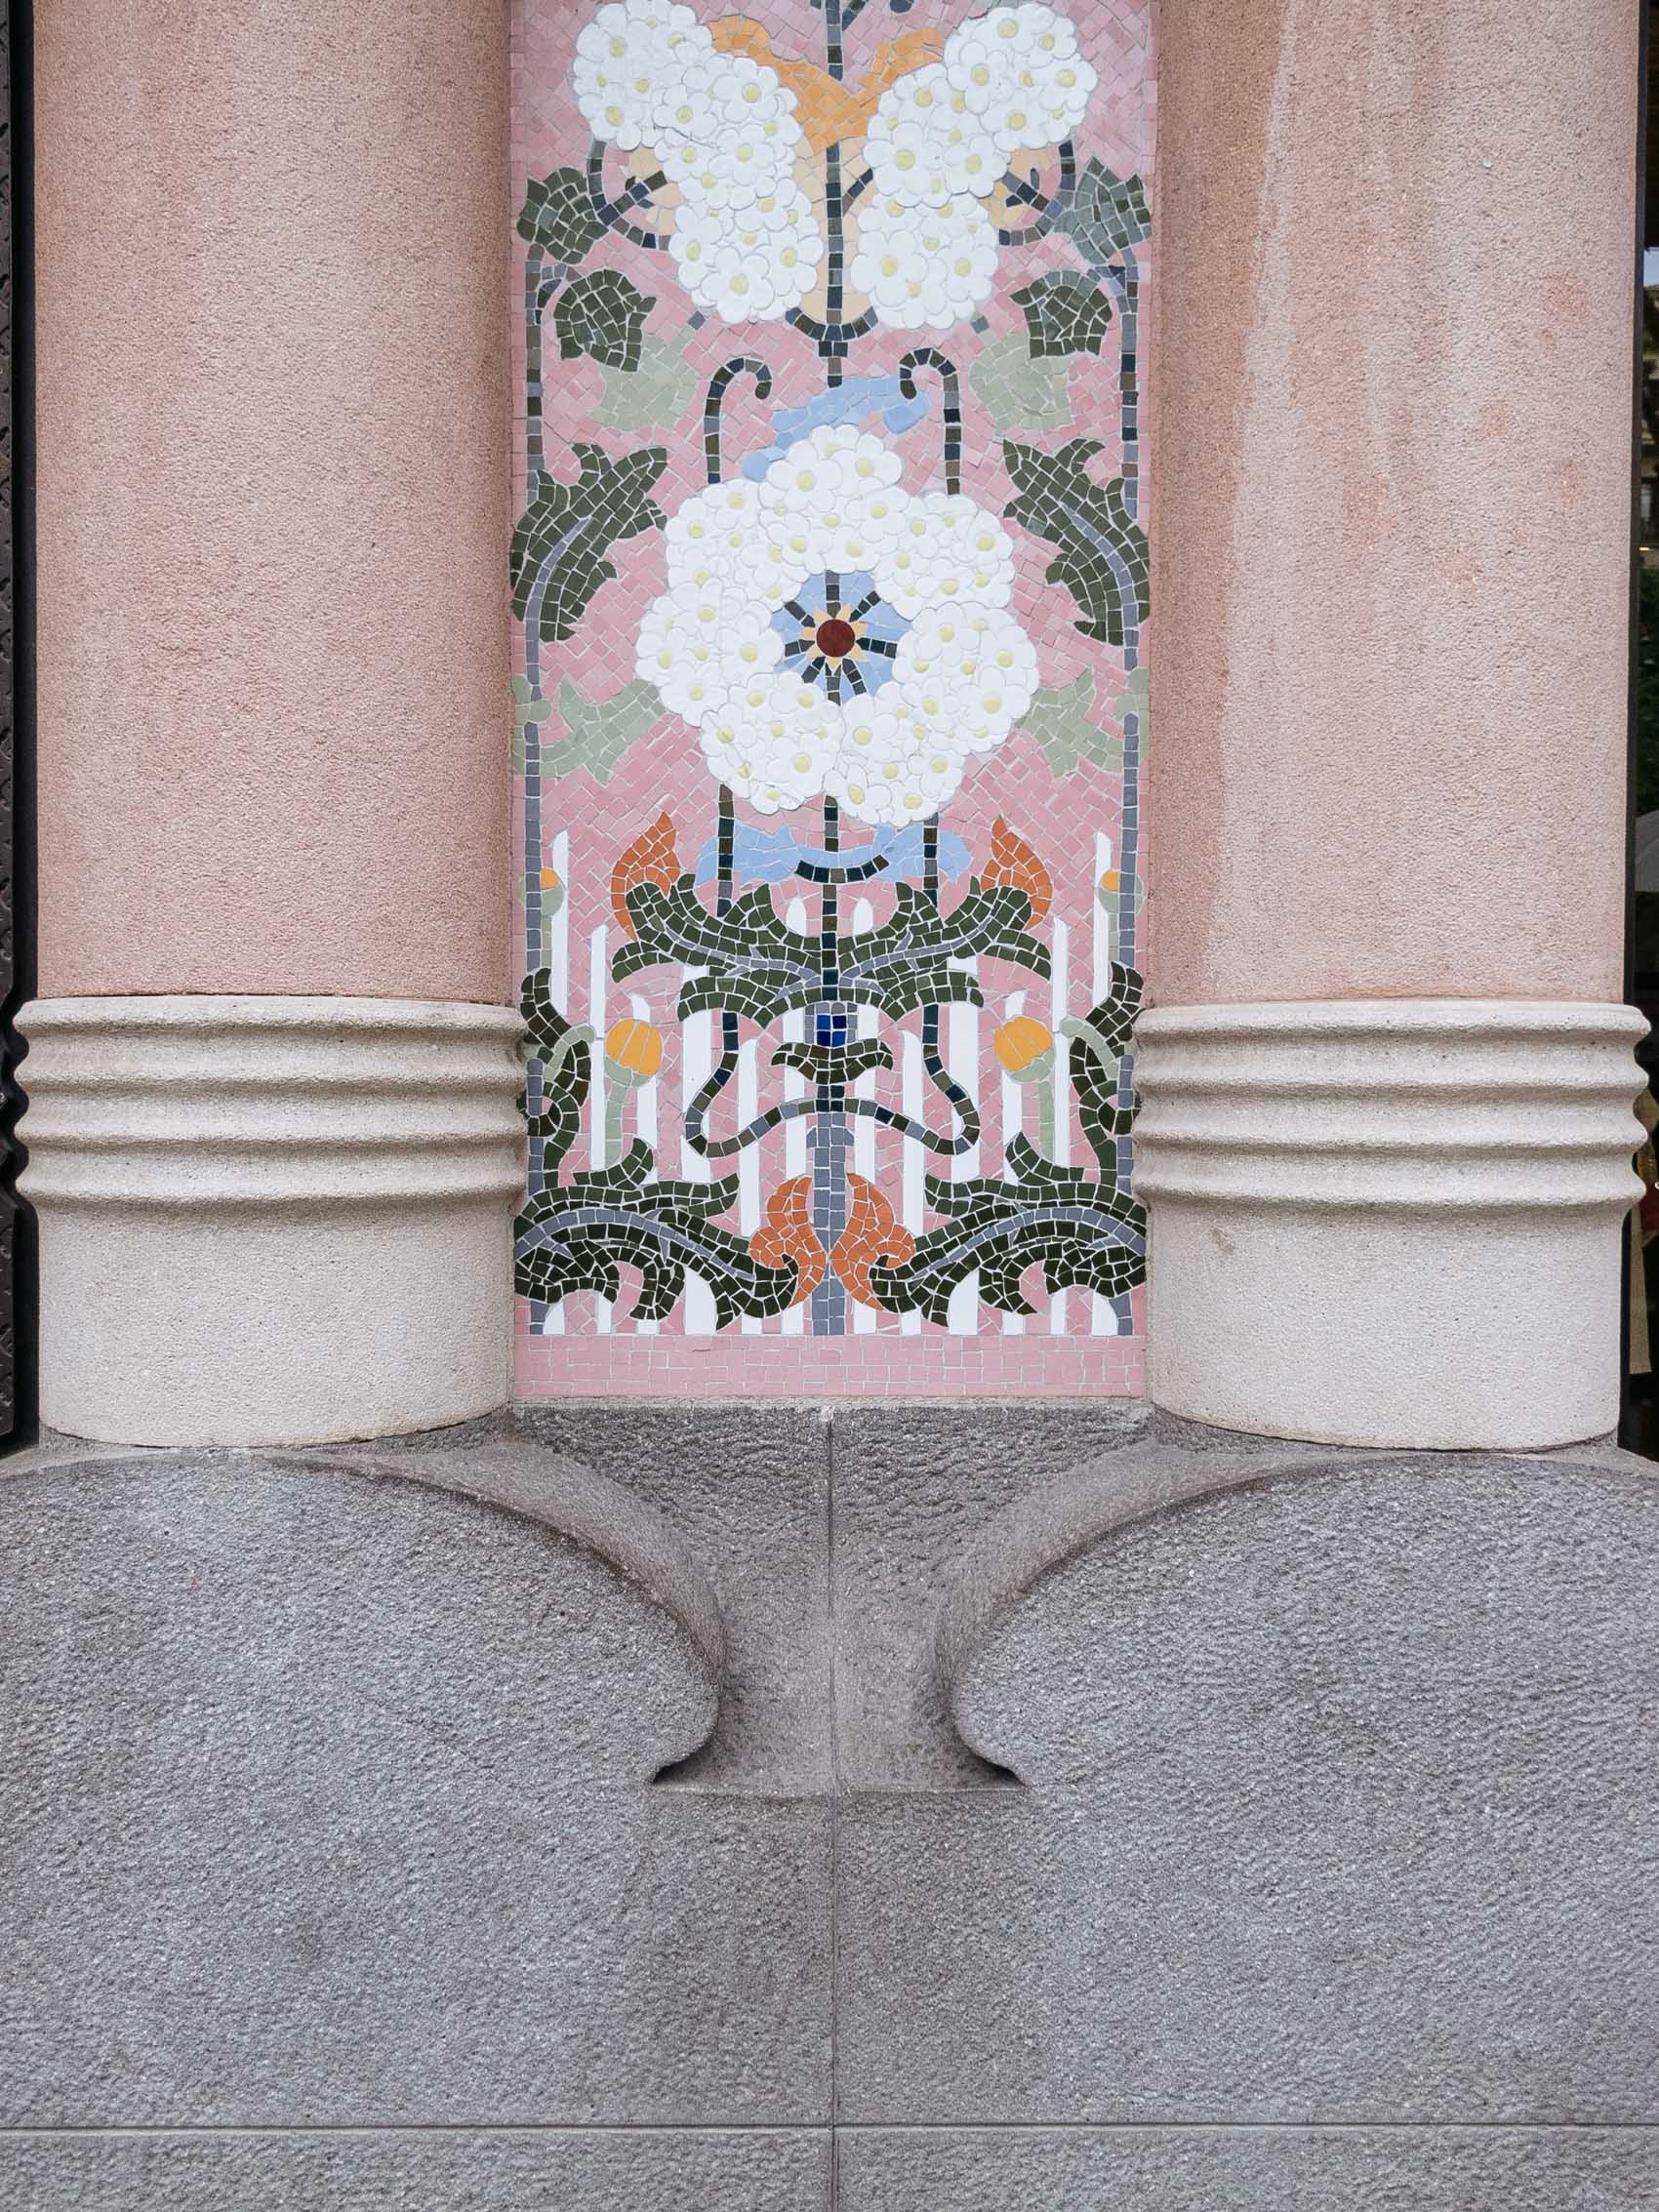 Barcelona mosaic craftsmanship and art outside of Loewe's Passeig de Gracia flagship